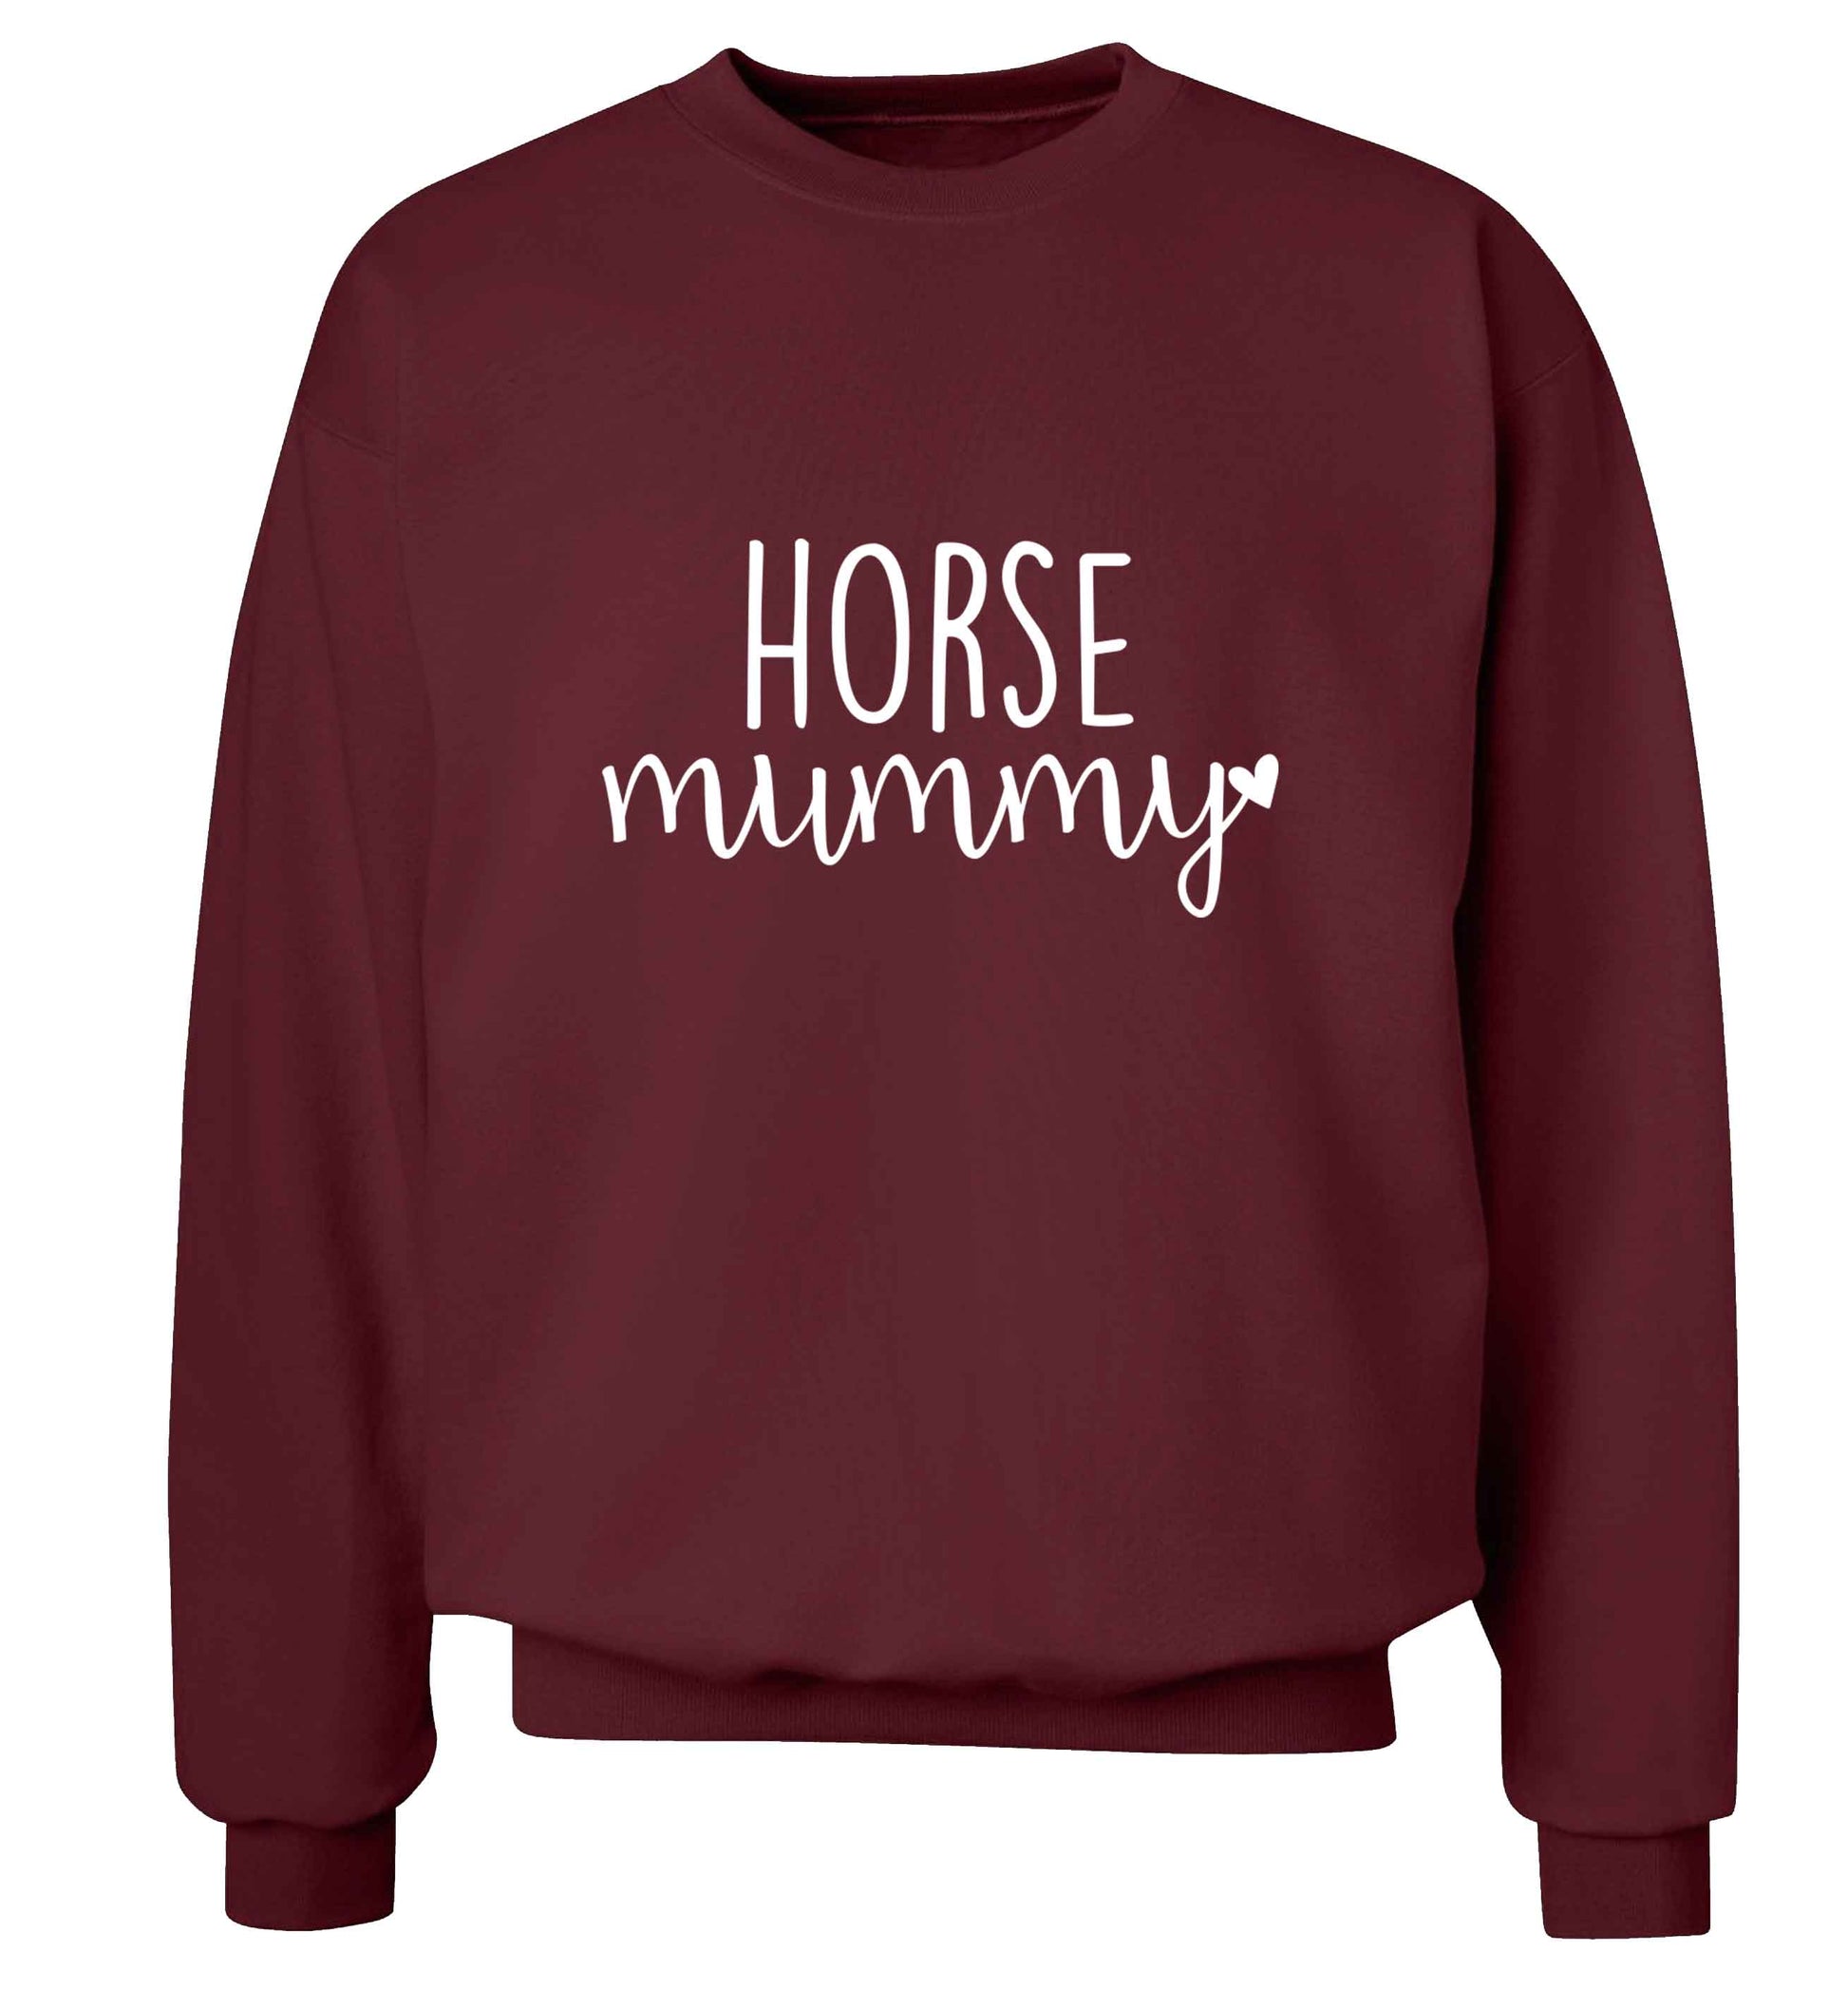 Horse mummy adult's unisex maroon sweater 2XL